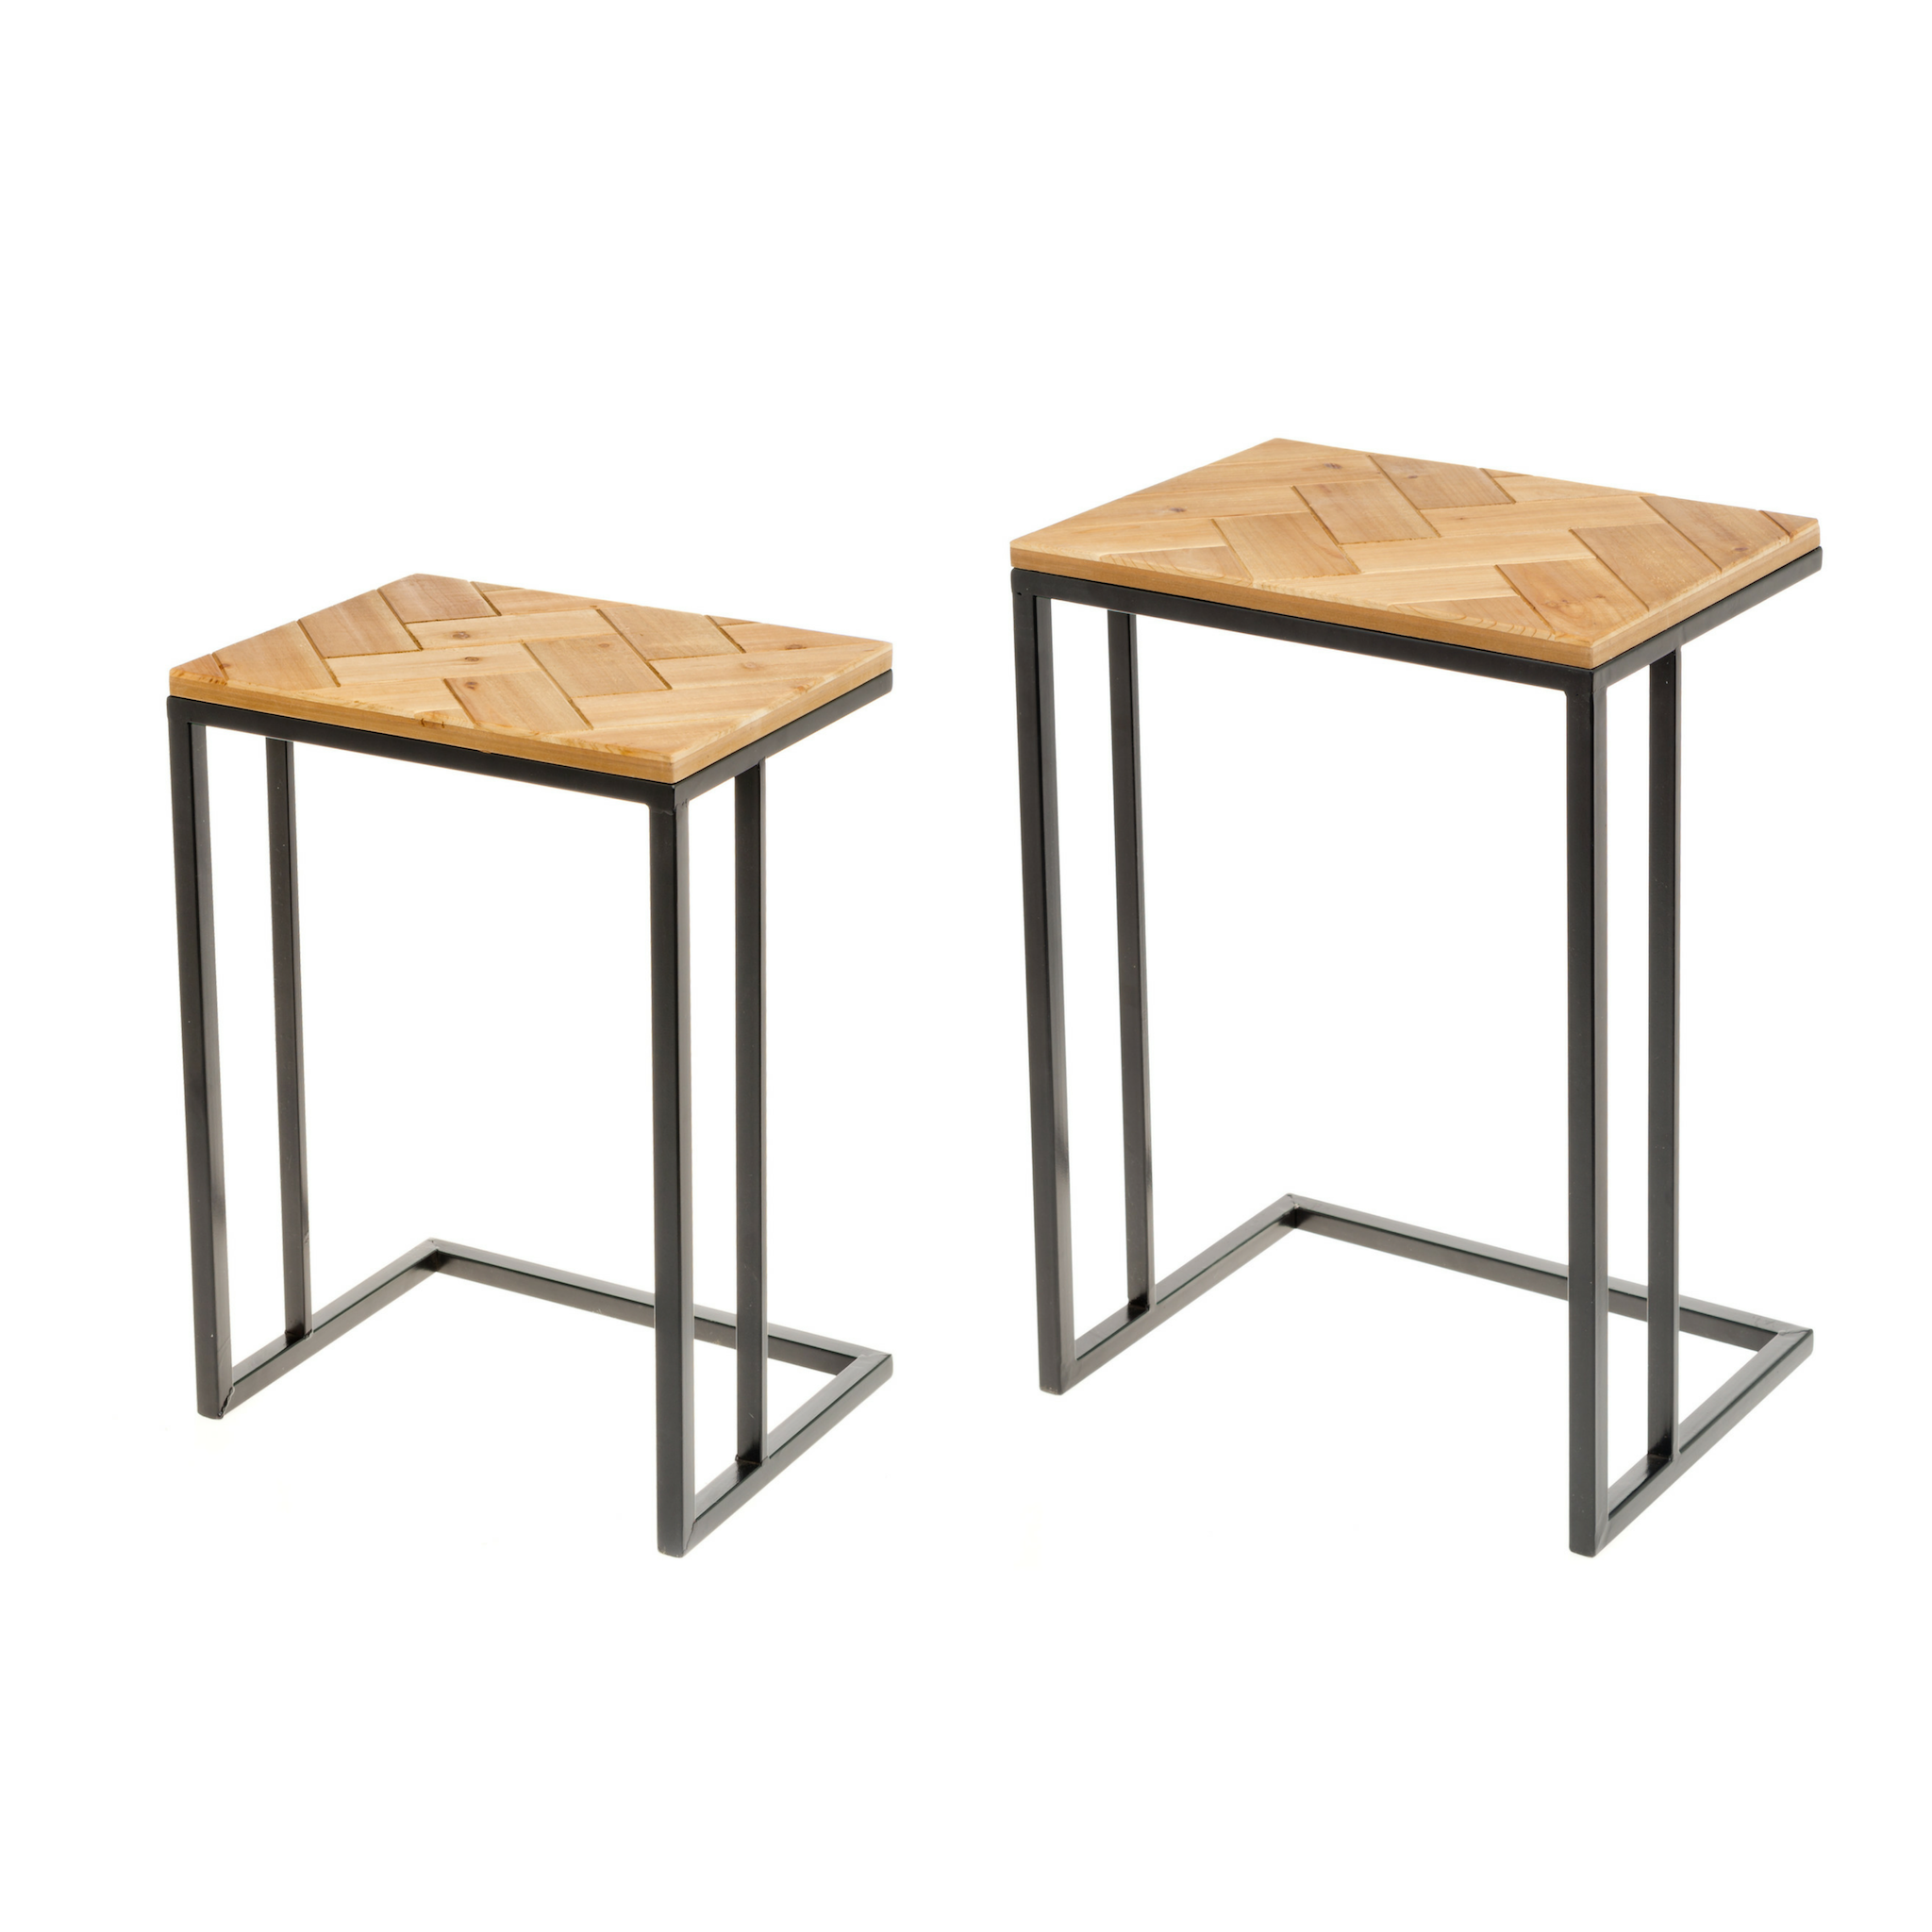 Fir Wood & Metal Table Set